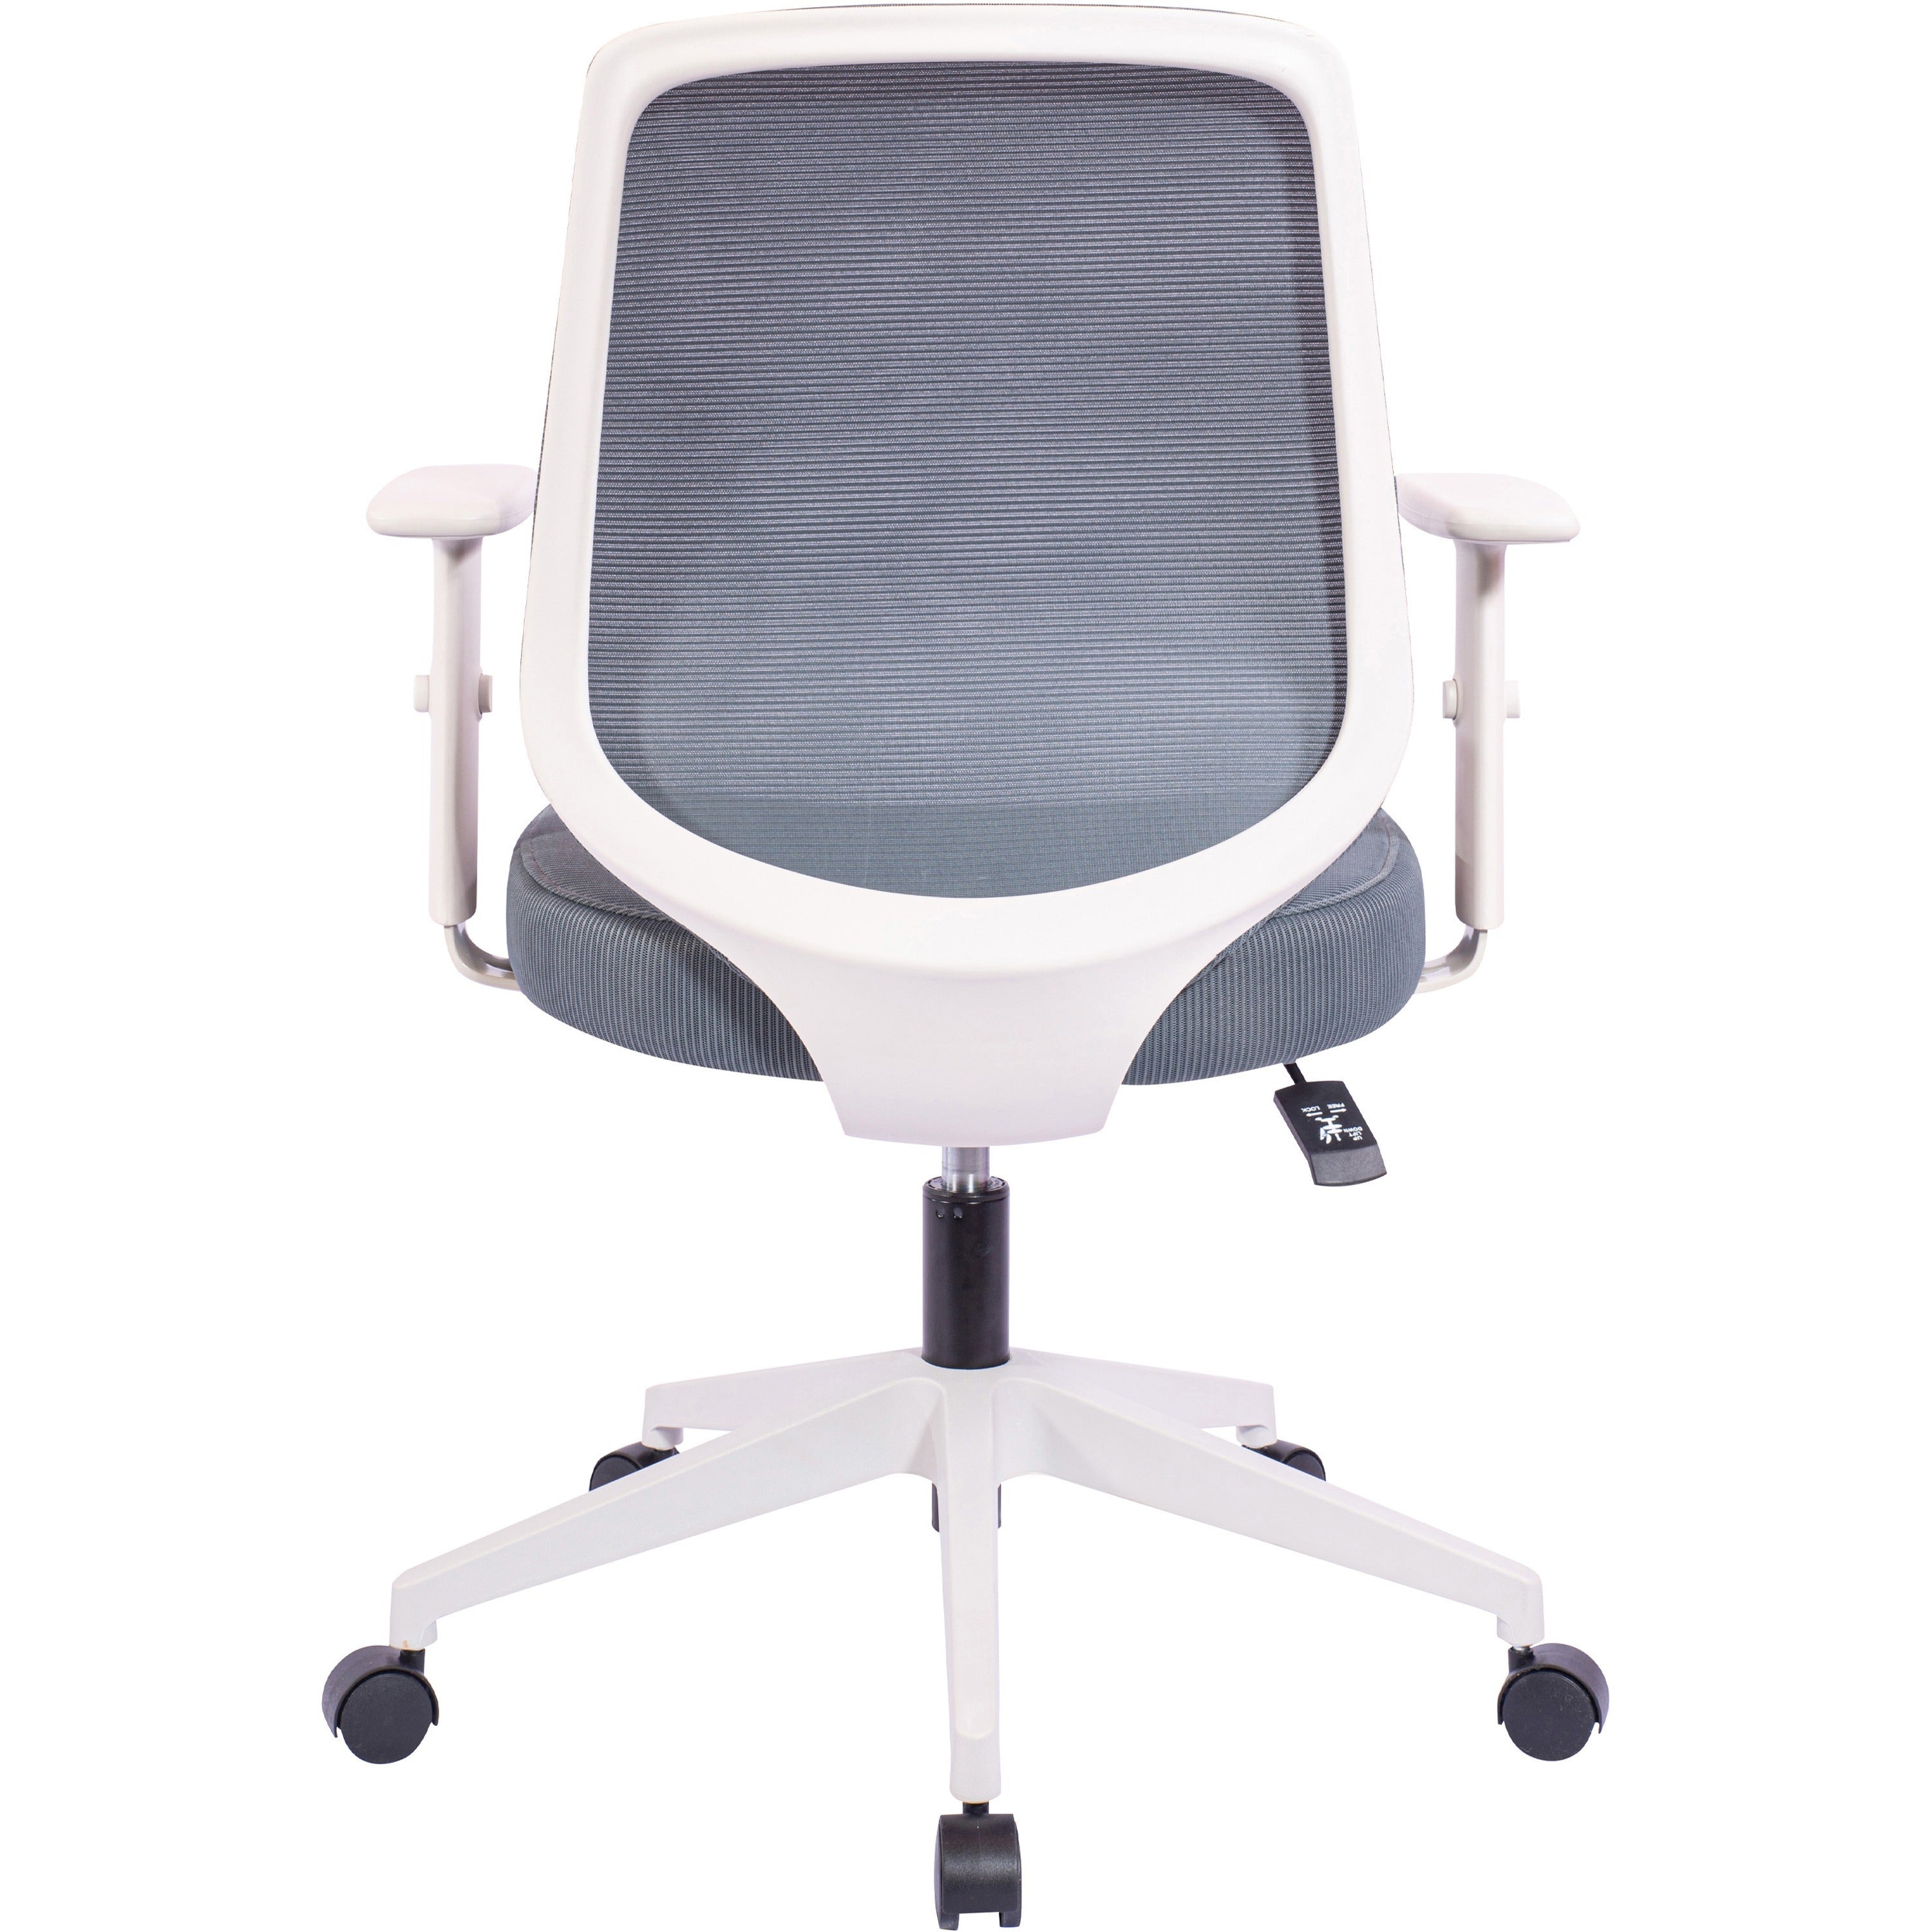 nusparc-mid-back-task-chair-fabric-back-mid-back-5-star-base-gray-armrest-1-each_nprch201magy - 5